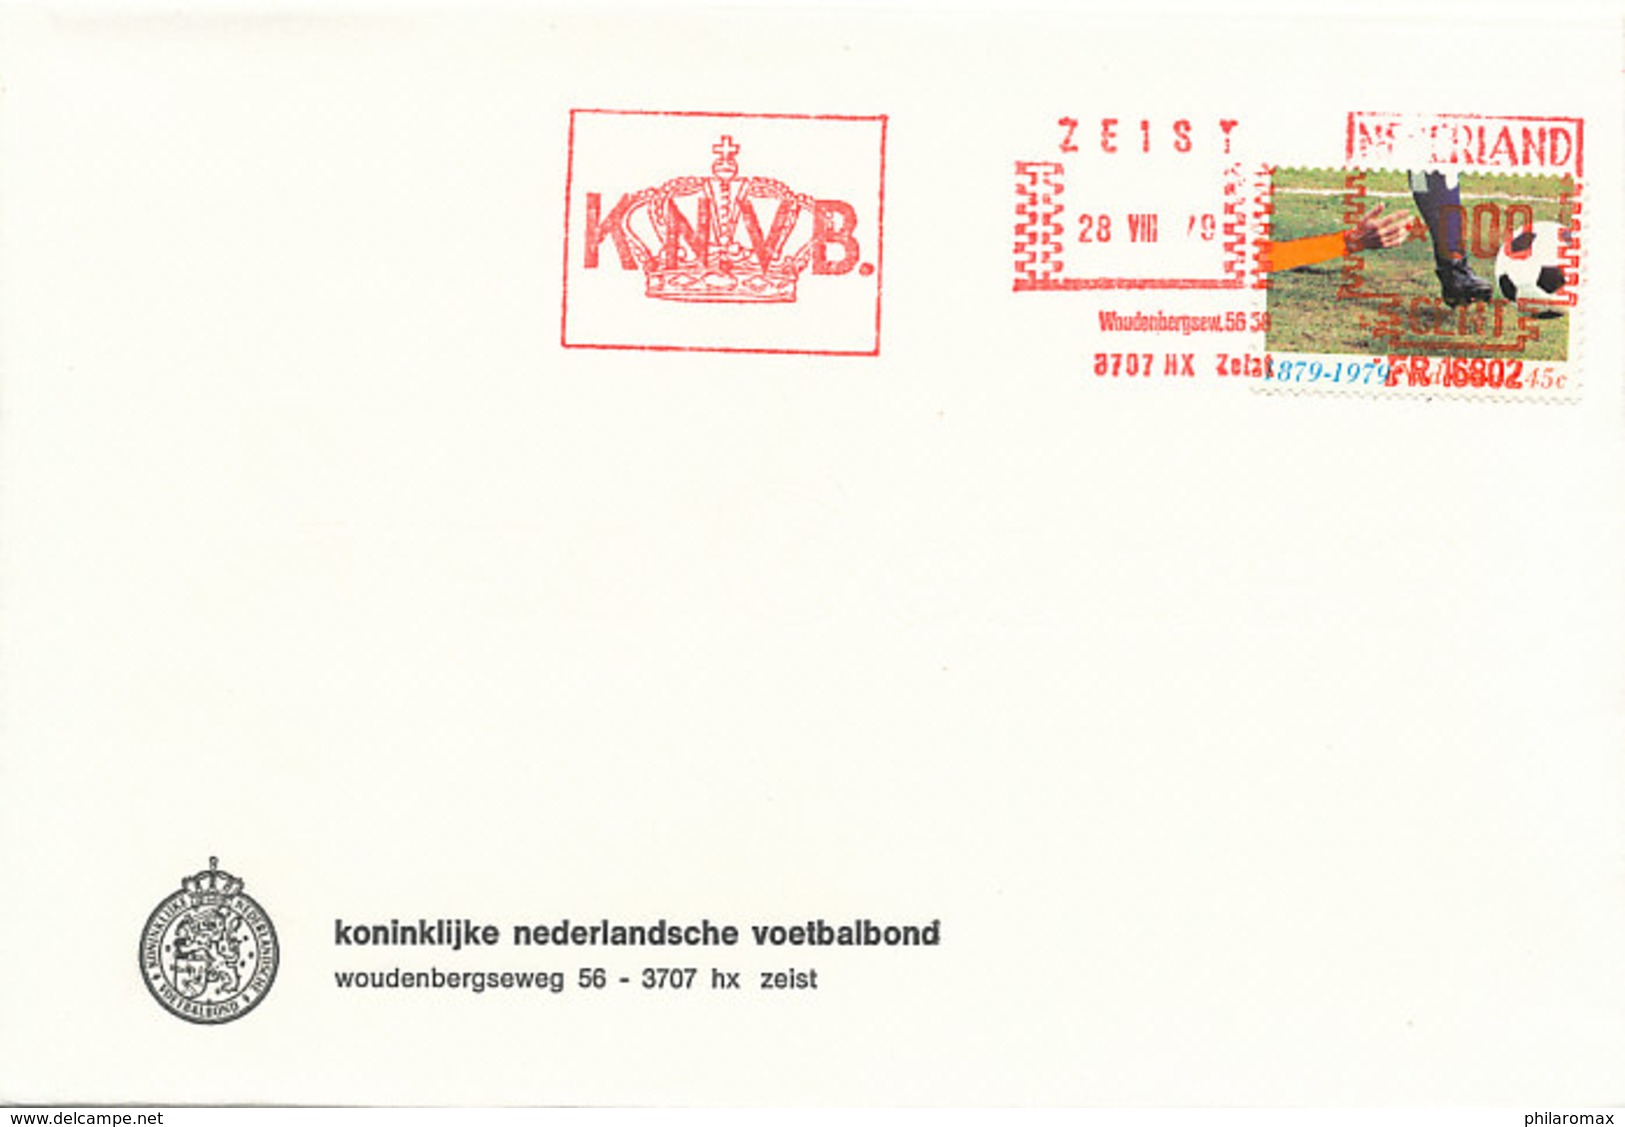 DC-1764 - 1979 NETHERLANDS - FDC 100 YEARS JUBILEE DUTCH SOCCER ORGANIZATION KNVB ZEIST - RED METER - Berühmte Teams